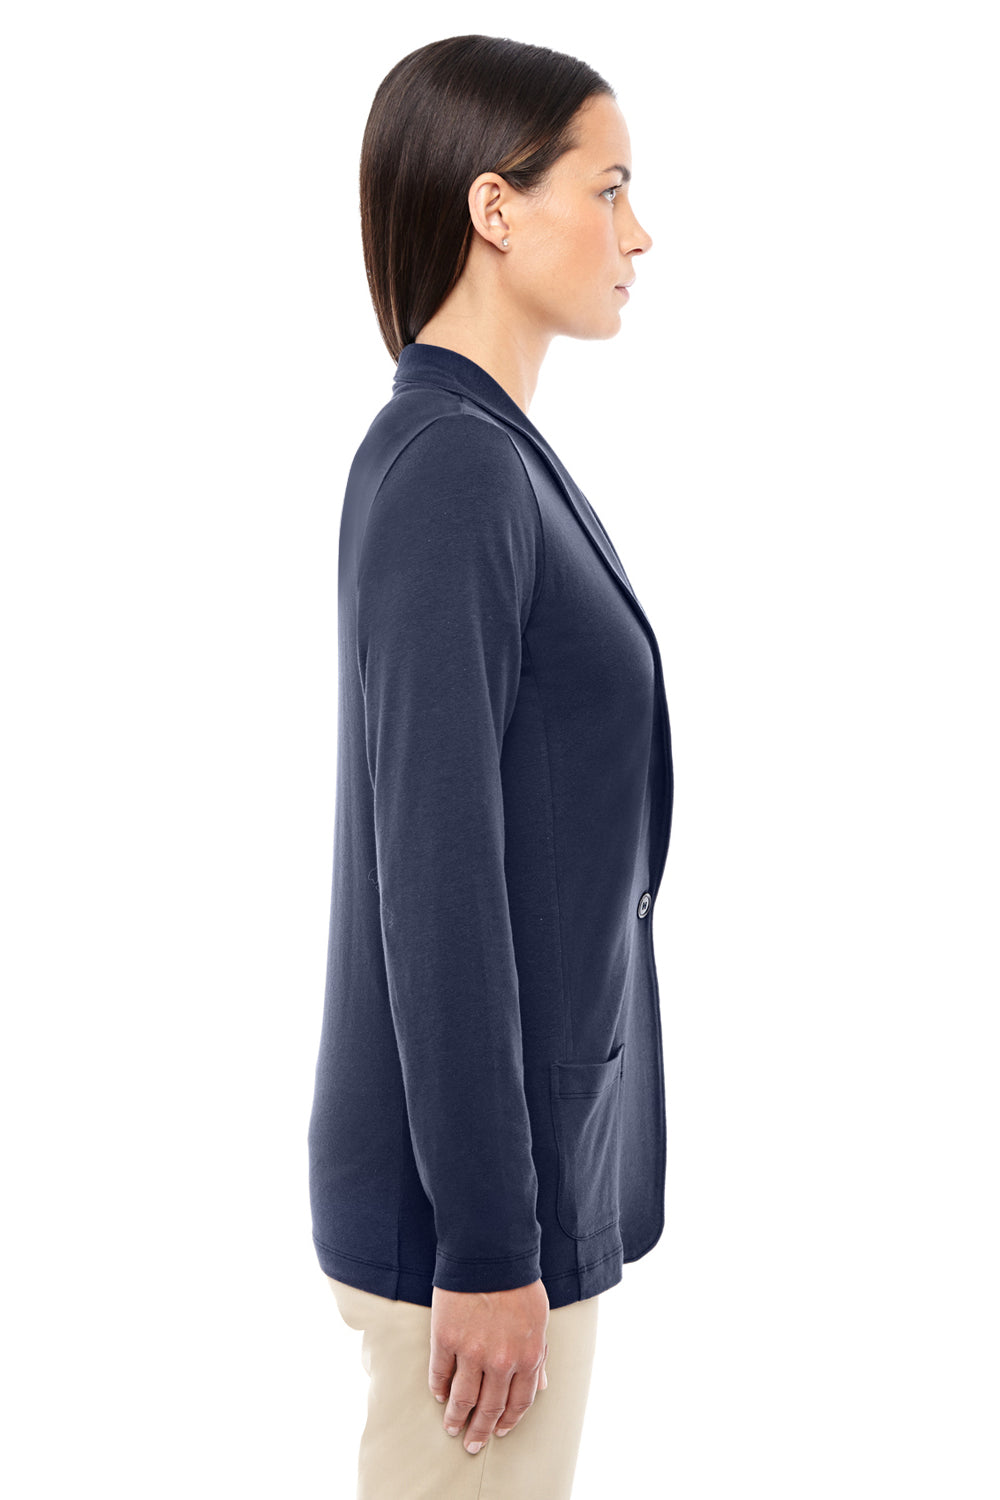 Devon & Jones DP462W Womens Perfect Fit Cardigan Sweater Navy Blue Side